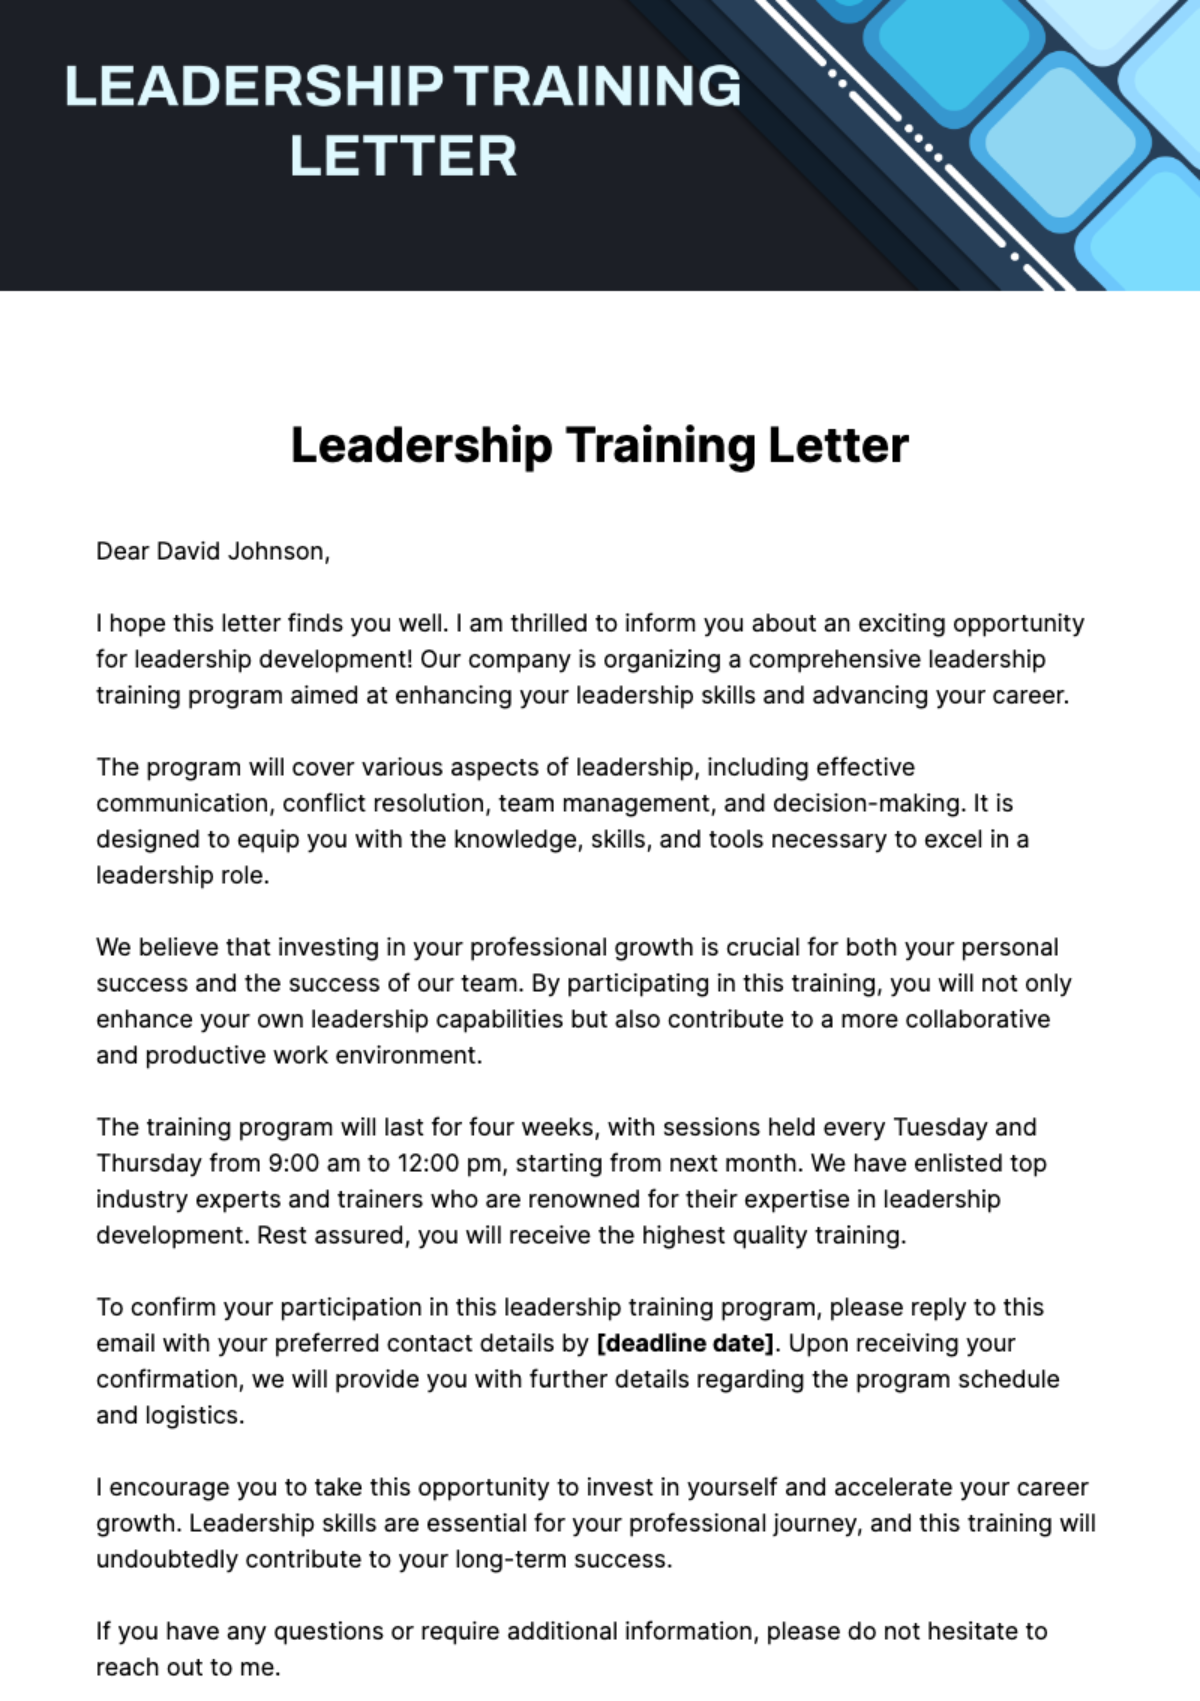 Leadership Training Letter Template